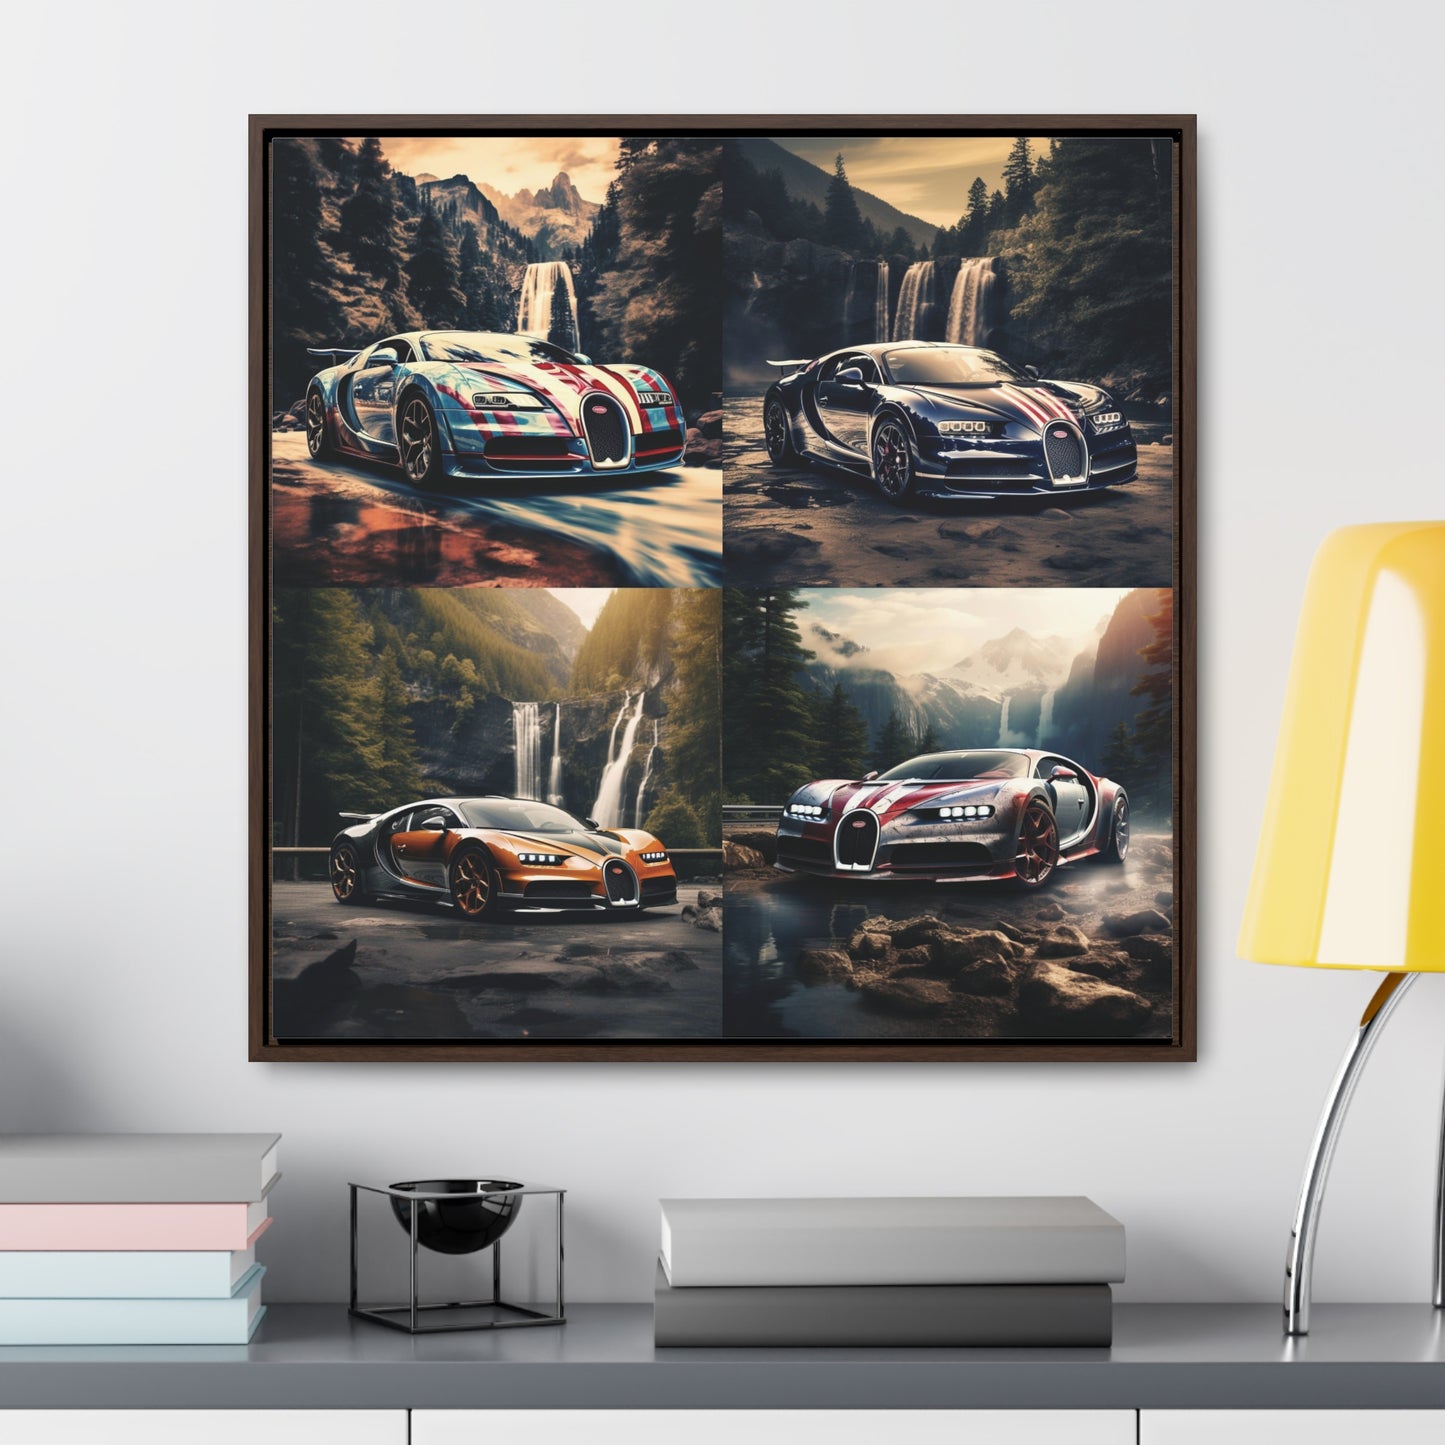 Gallery Canvas Wraps, Square Frame Bugatti Waterfall 5